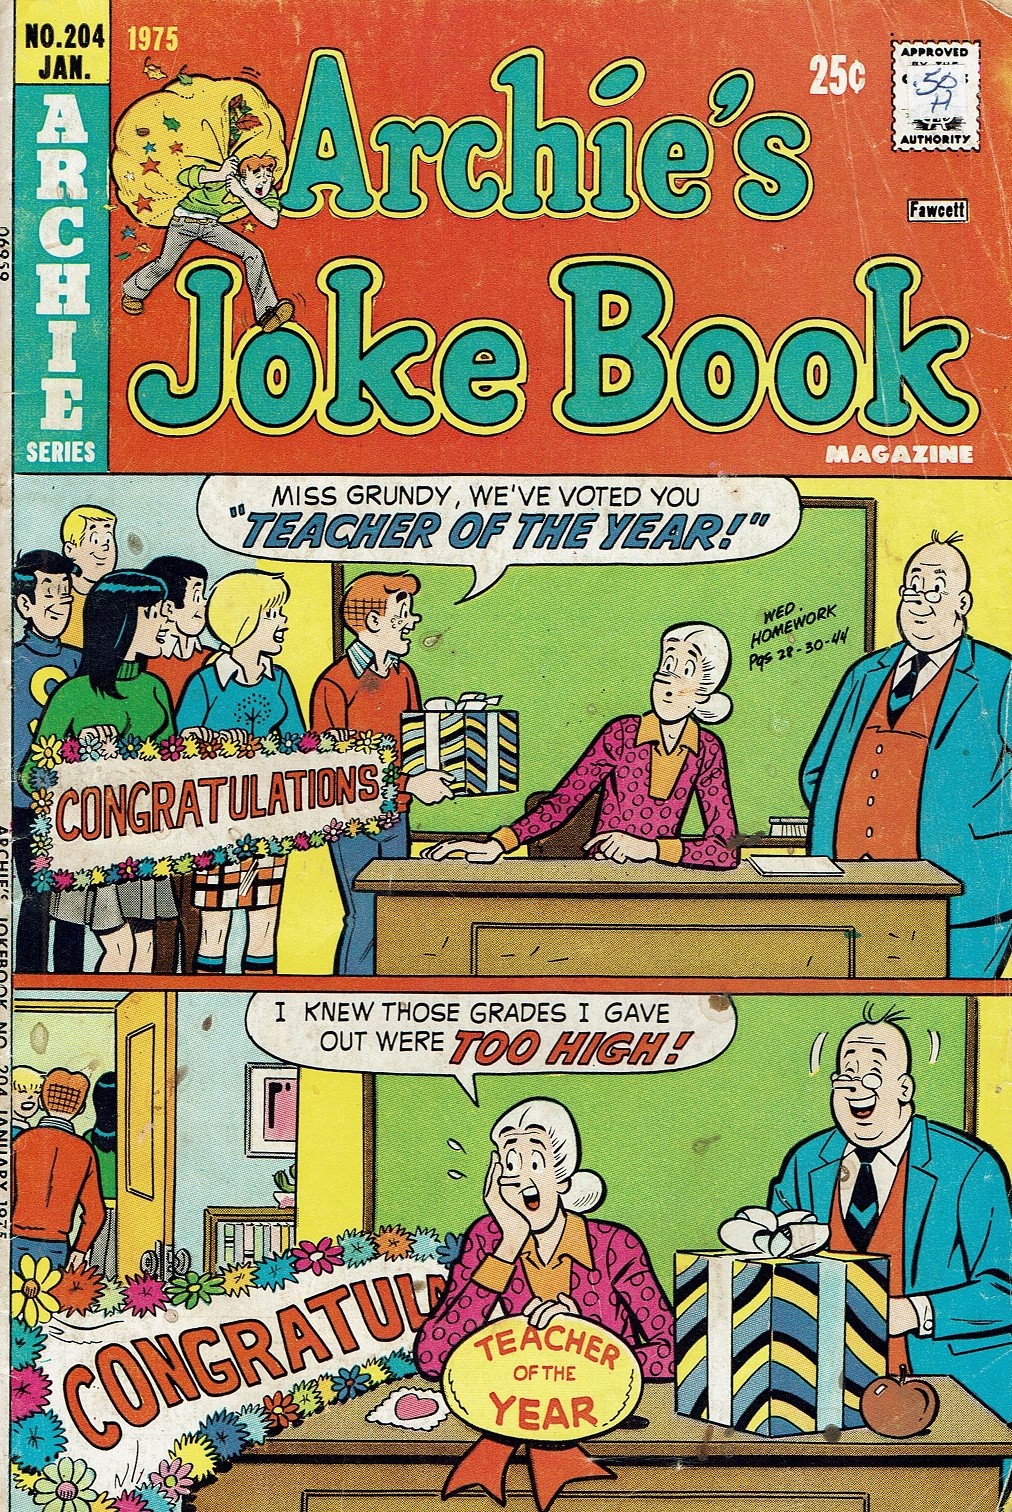 Archie's Joke Book Magazine issue 204 - Page 1